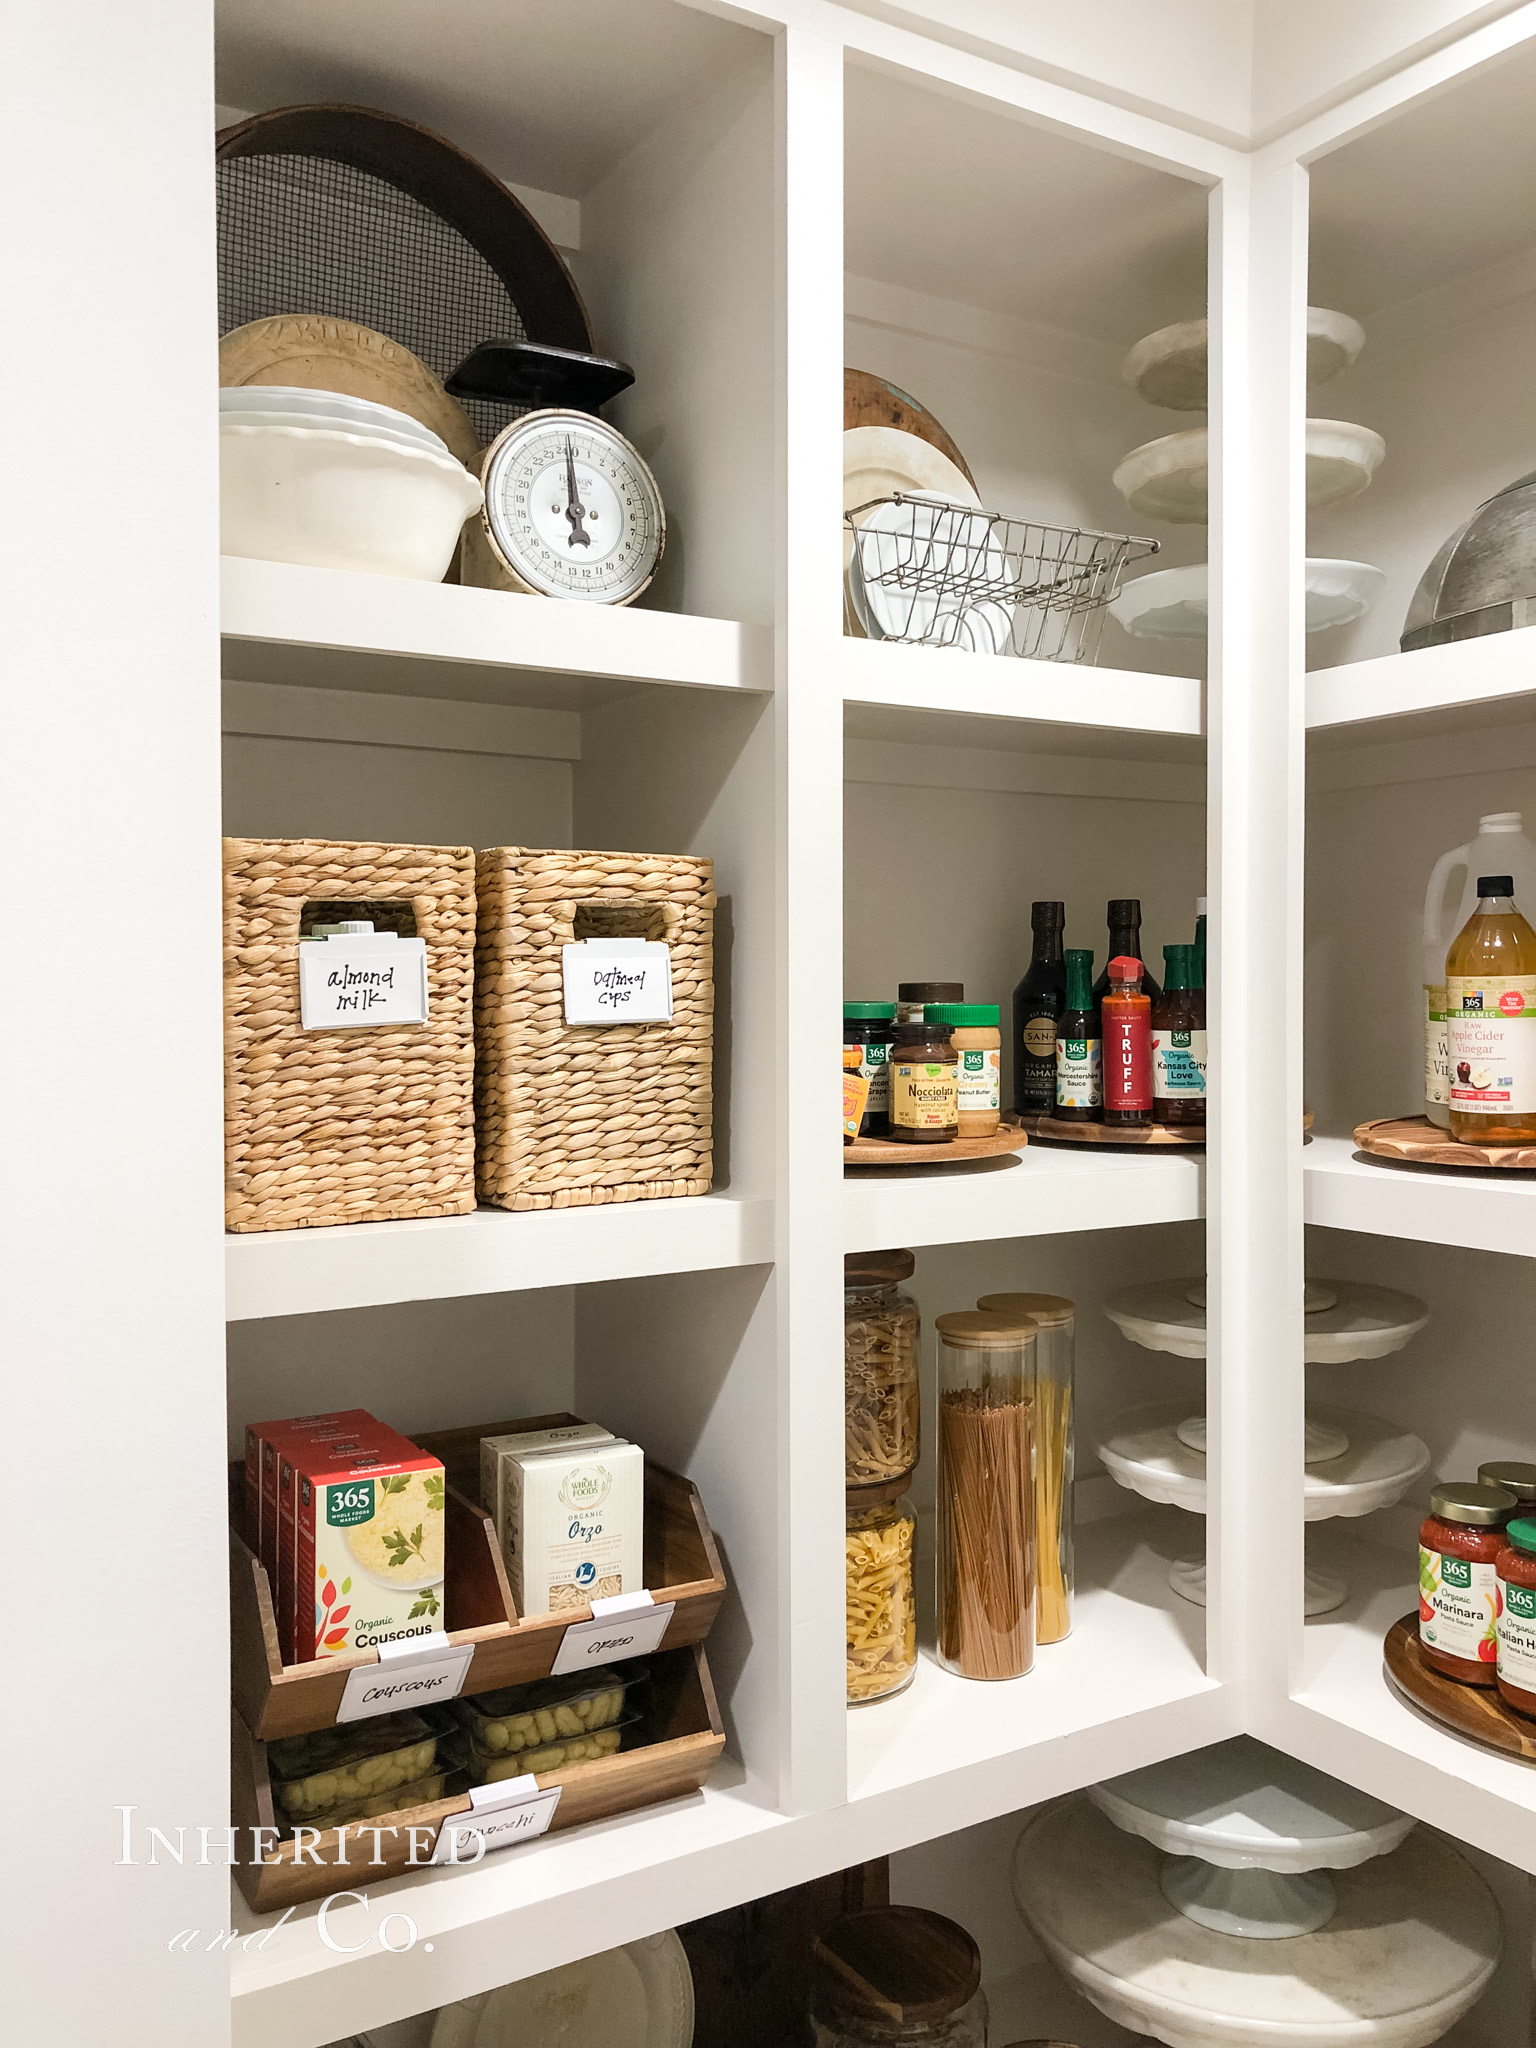 Organized pantry shelves